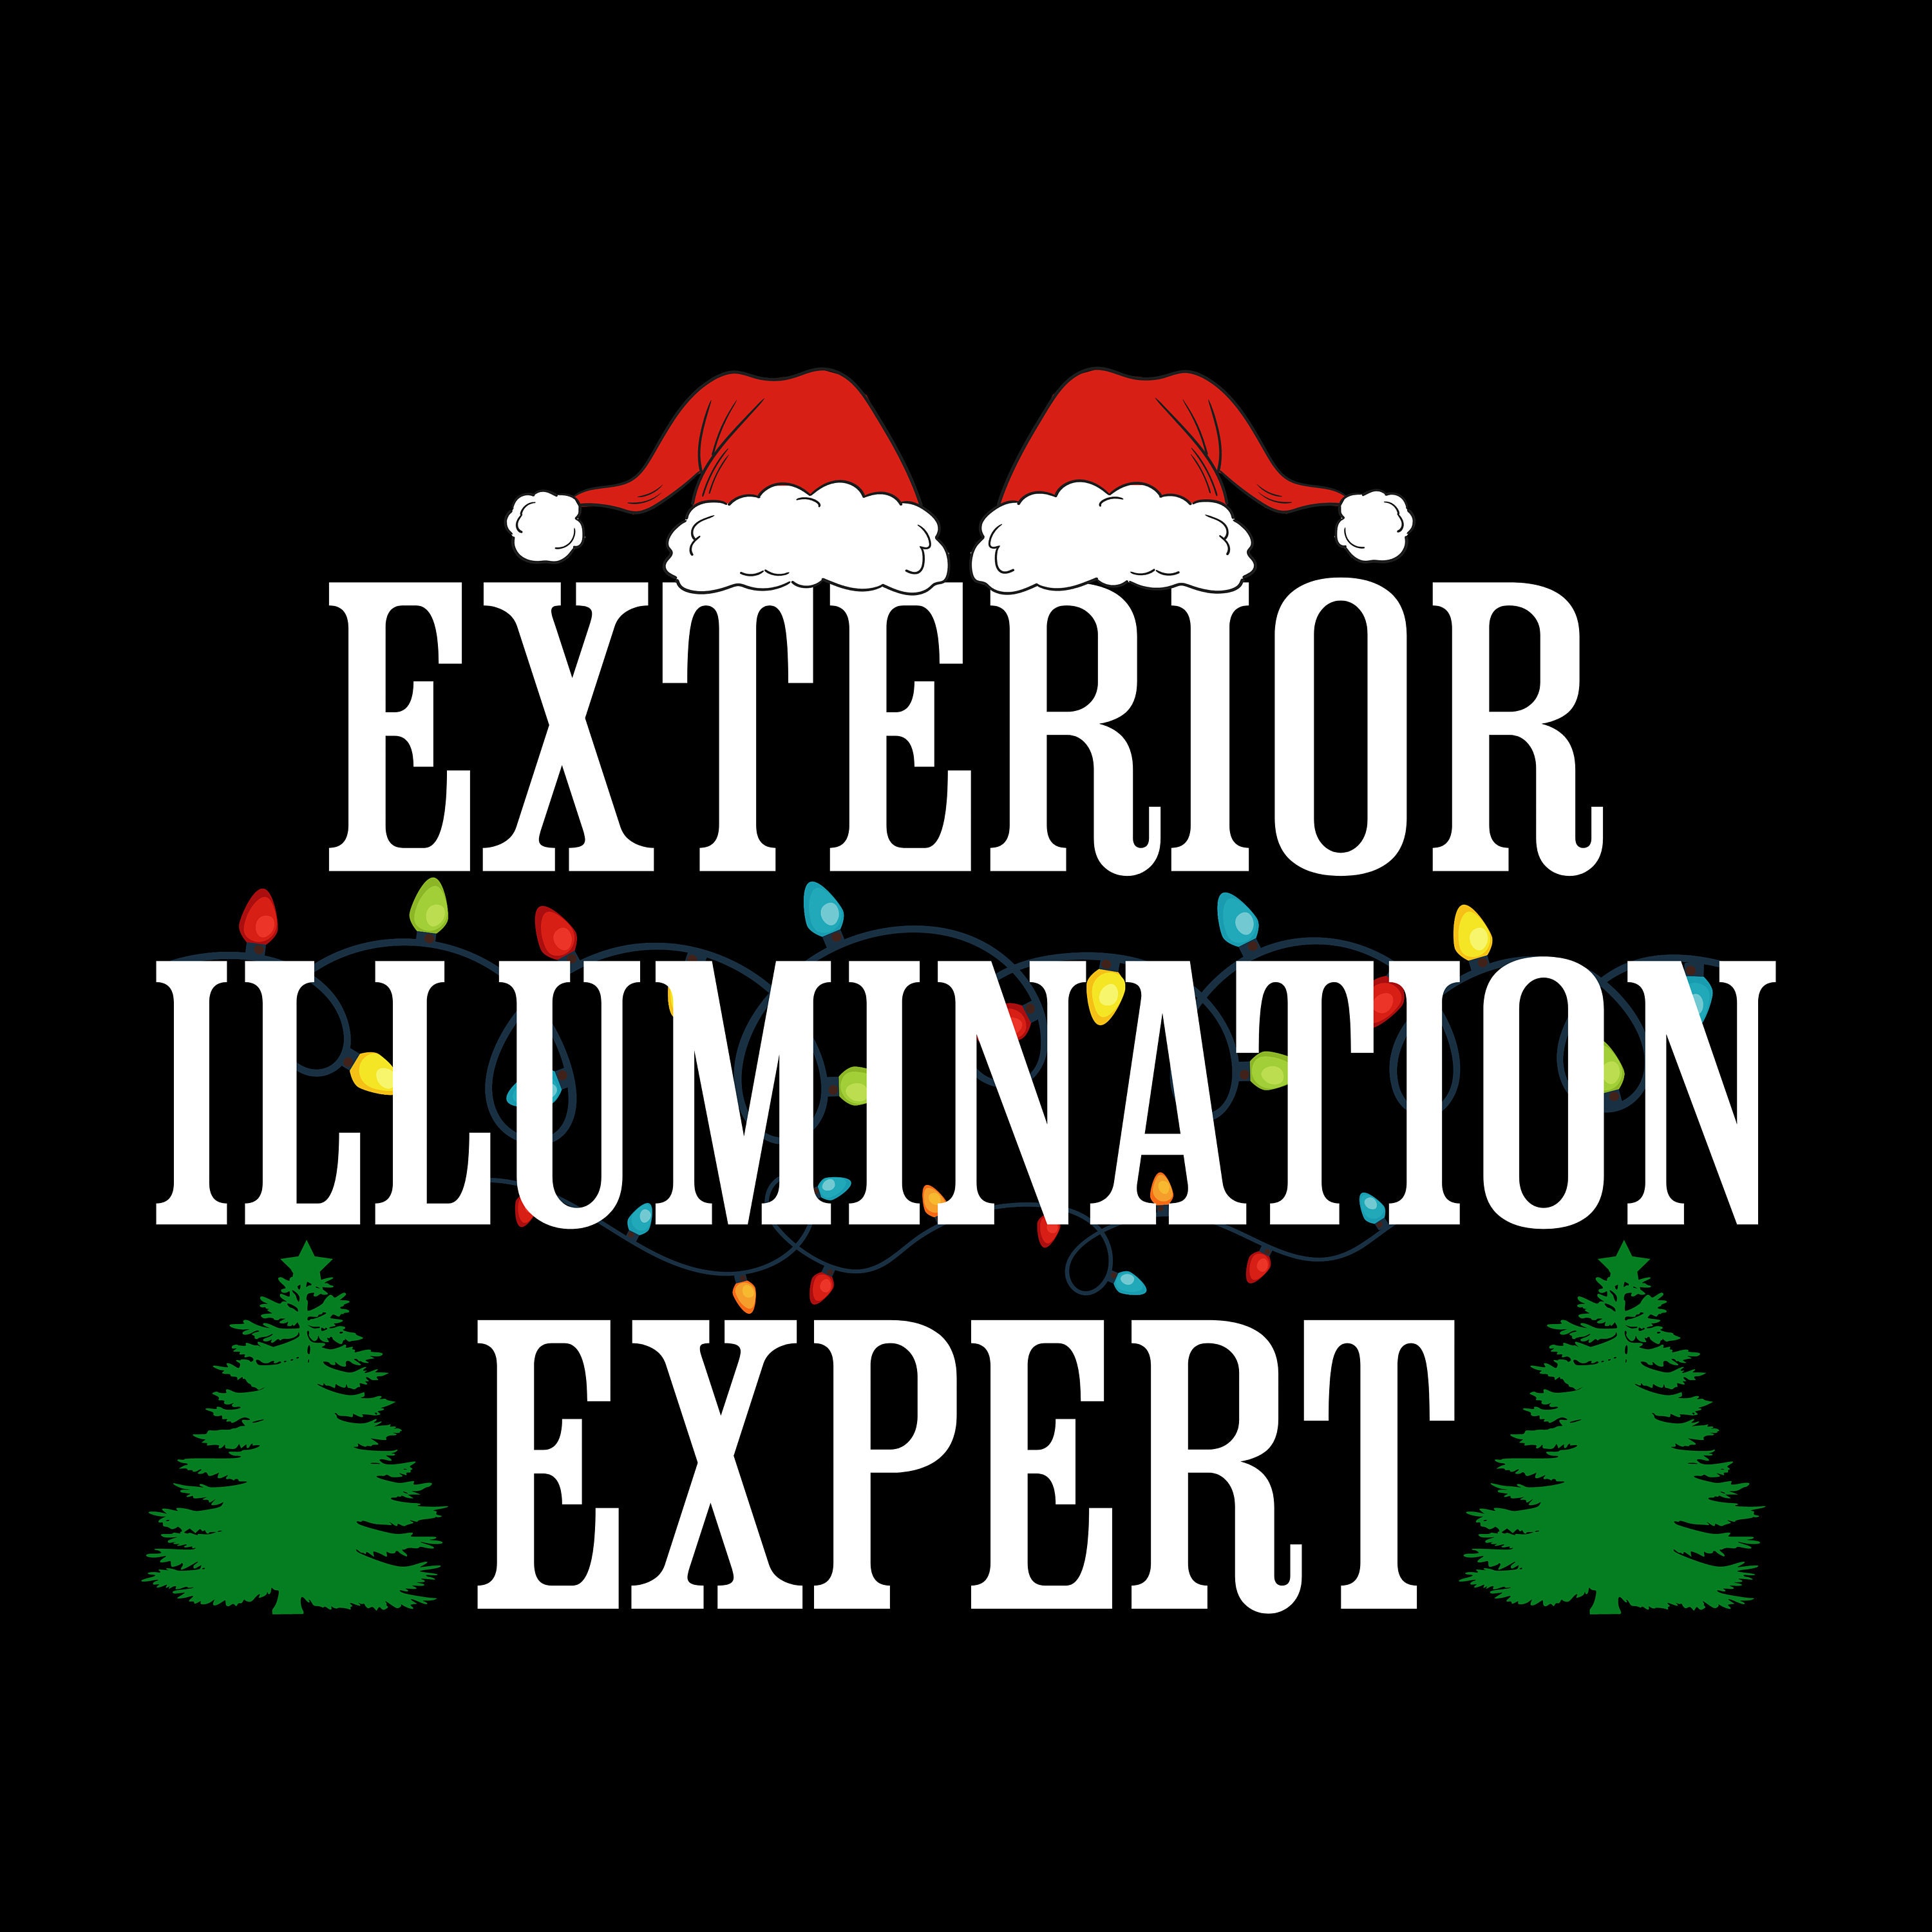 Christmas Vacation movie, Exterior Illumination Expert, Clar